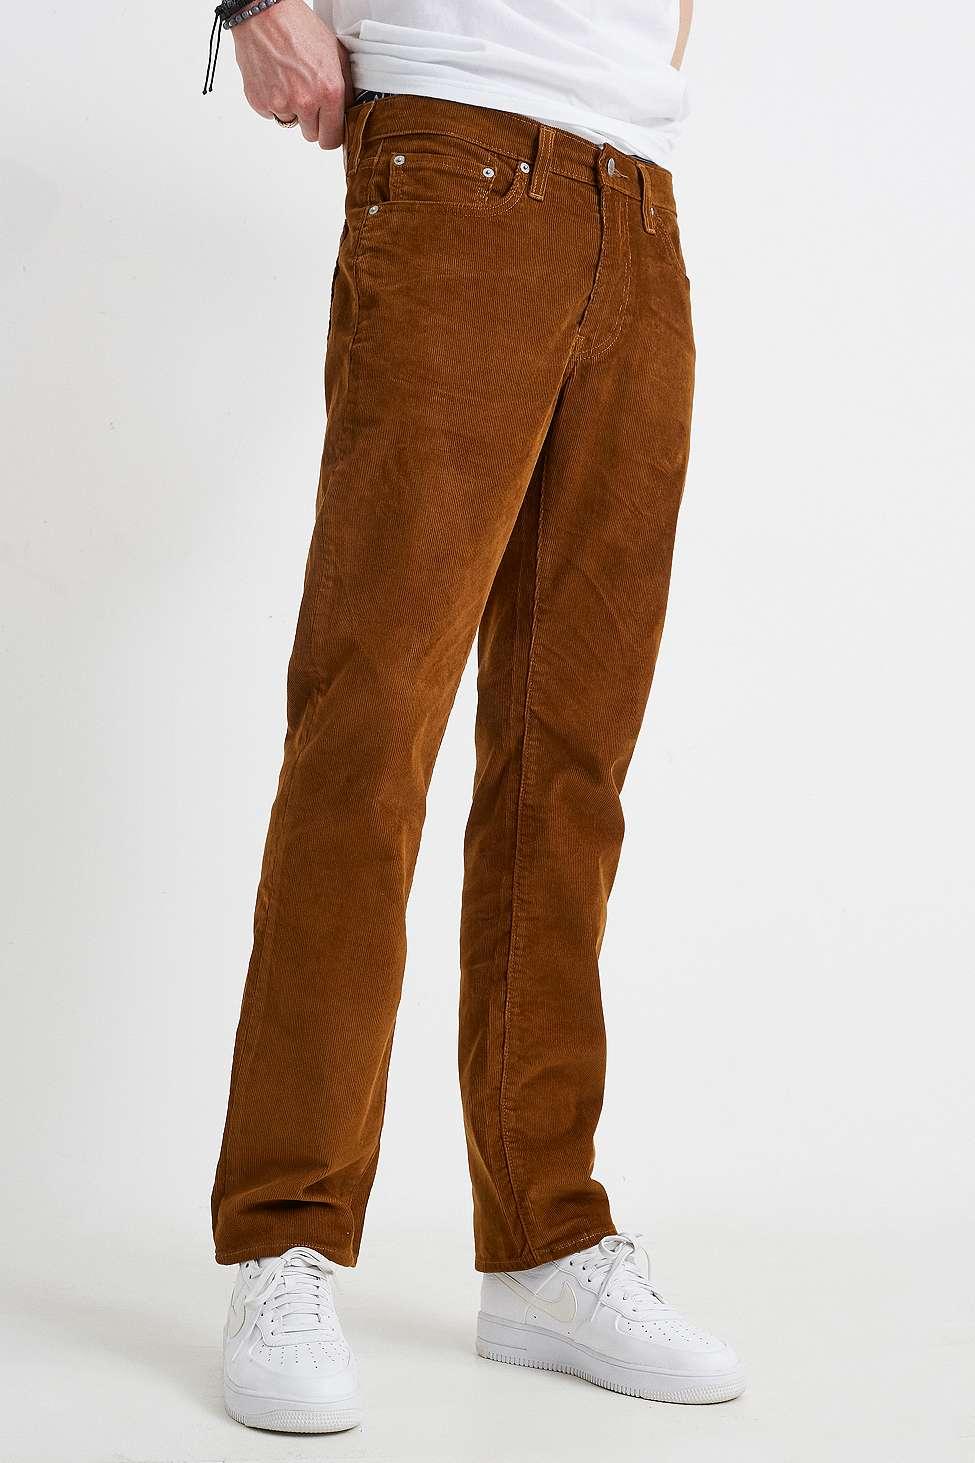 Levi's 514 Slim Brown Corduroy Trousers for Men - Lyst